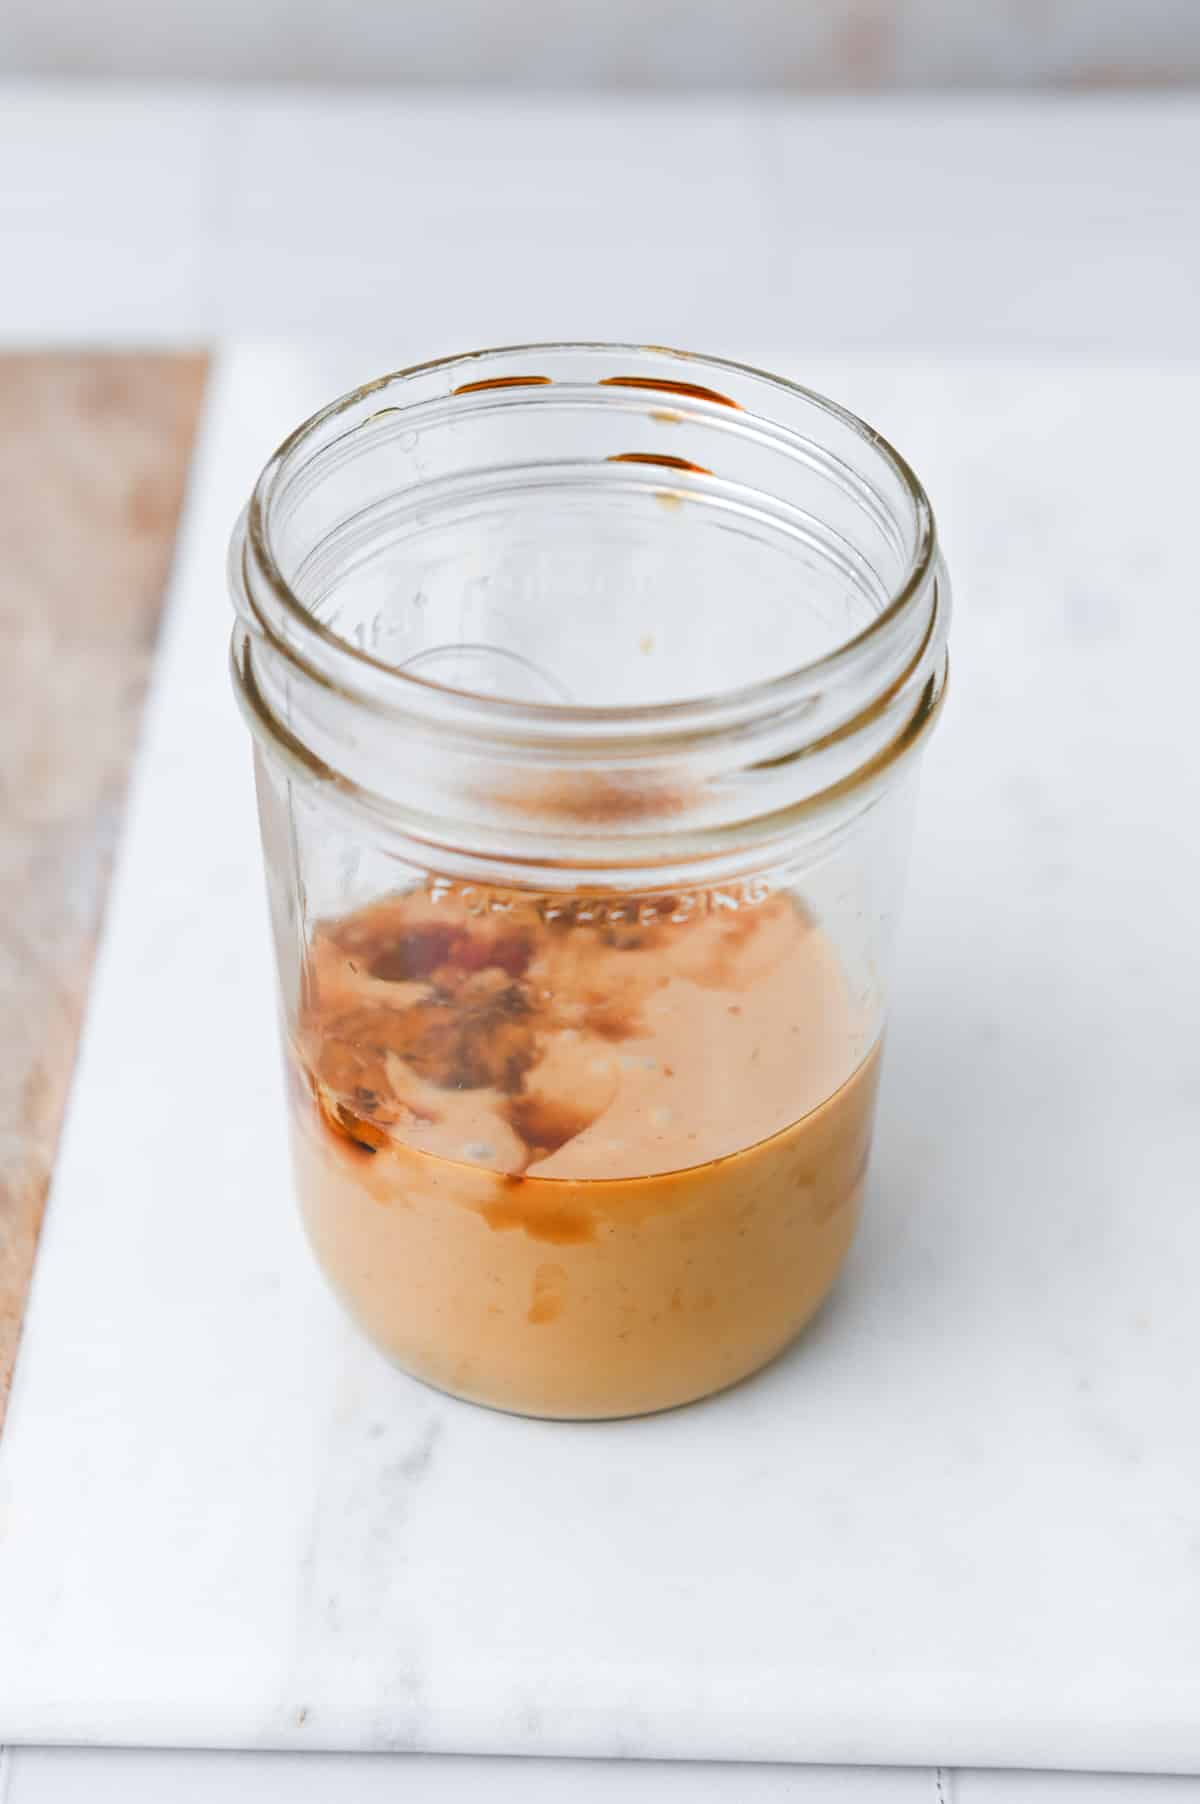 Peanut sauce ingredients in a glass jar.